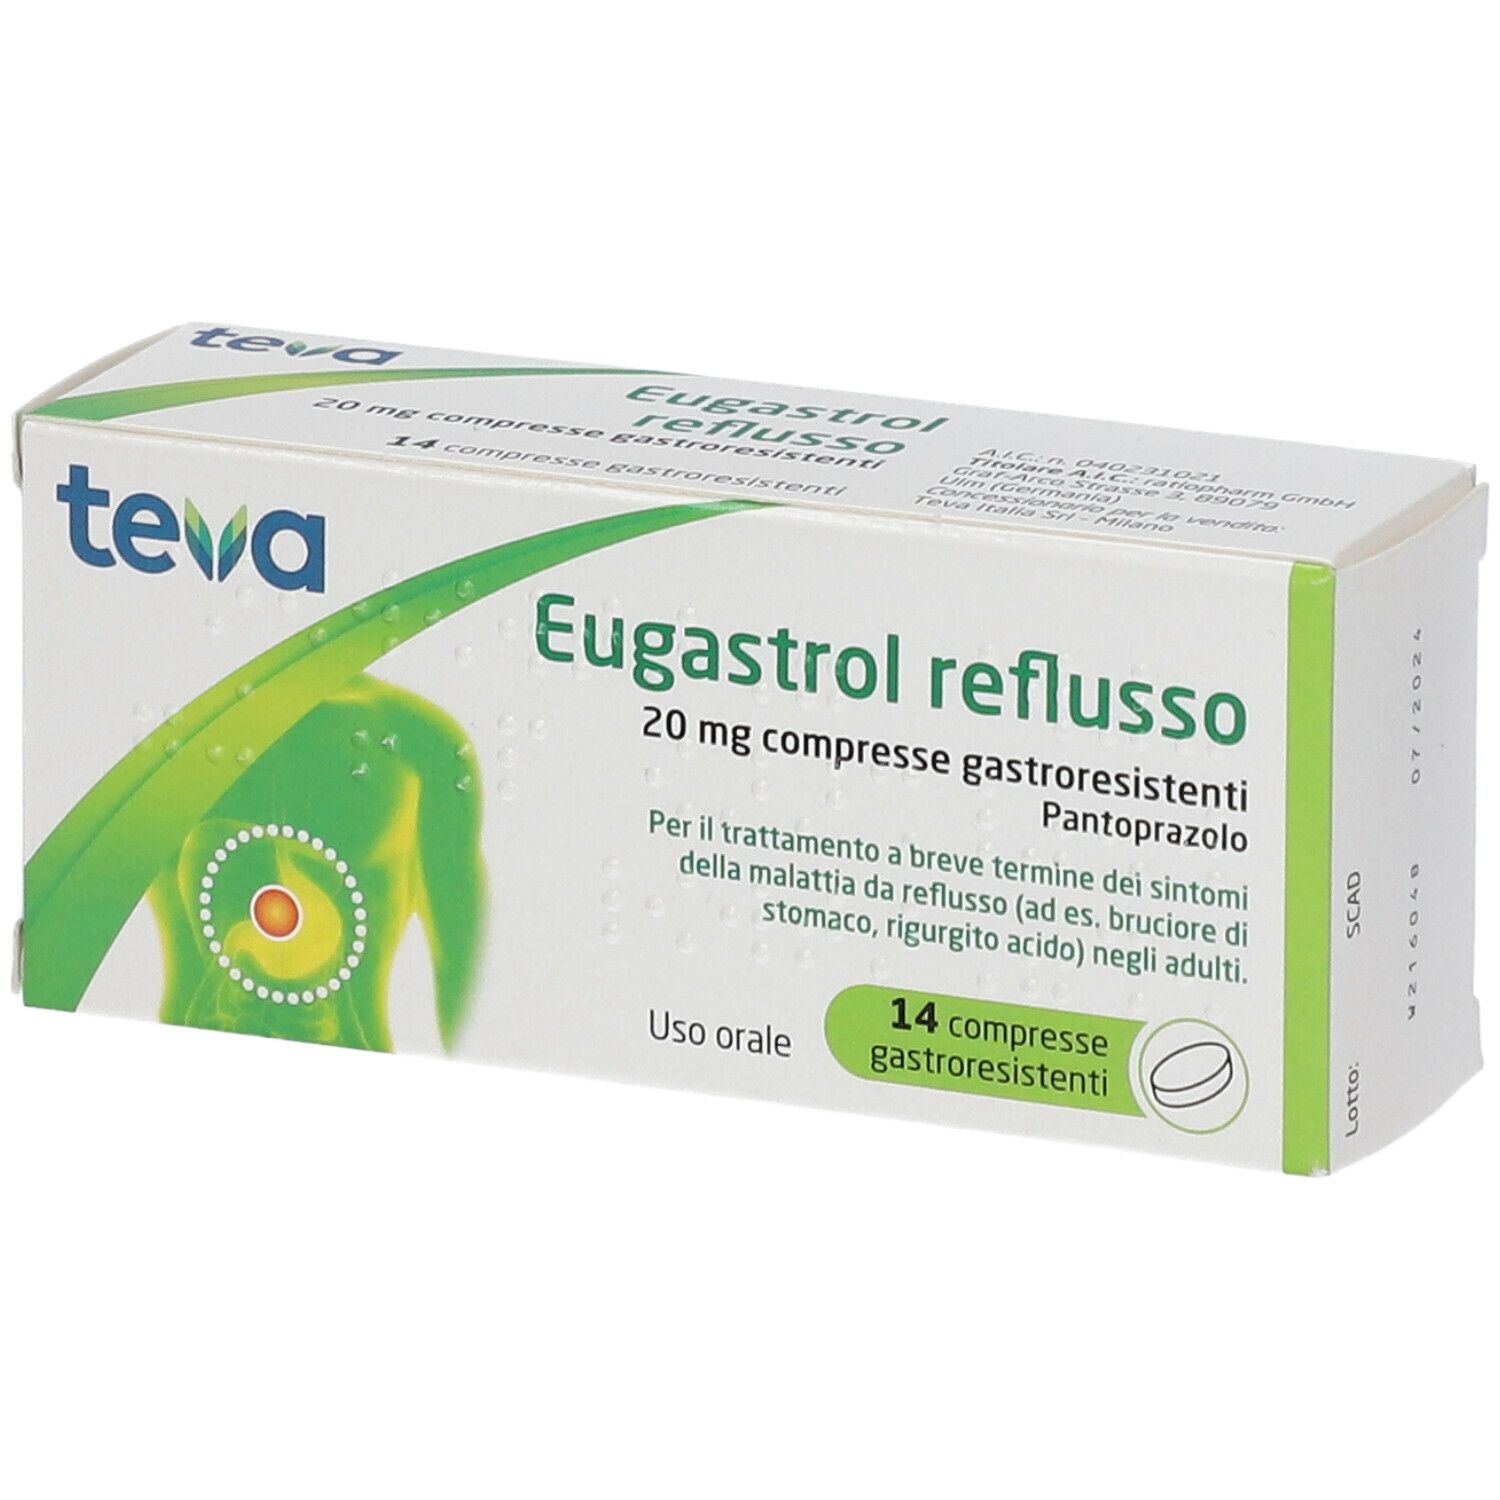 Eugastrol reflusso 14 compresse